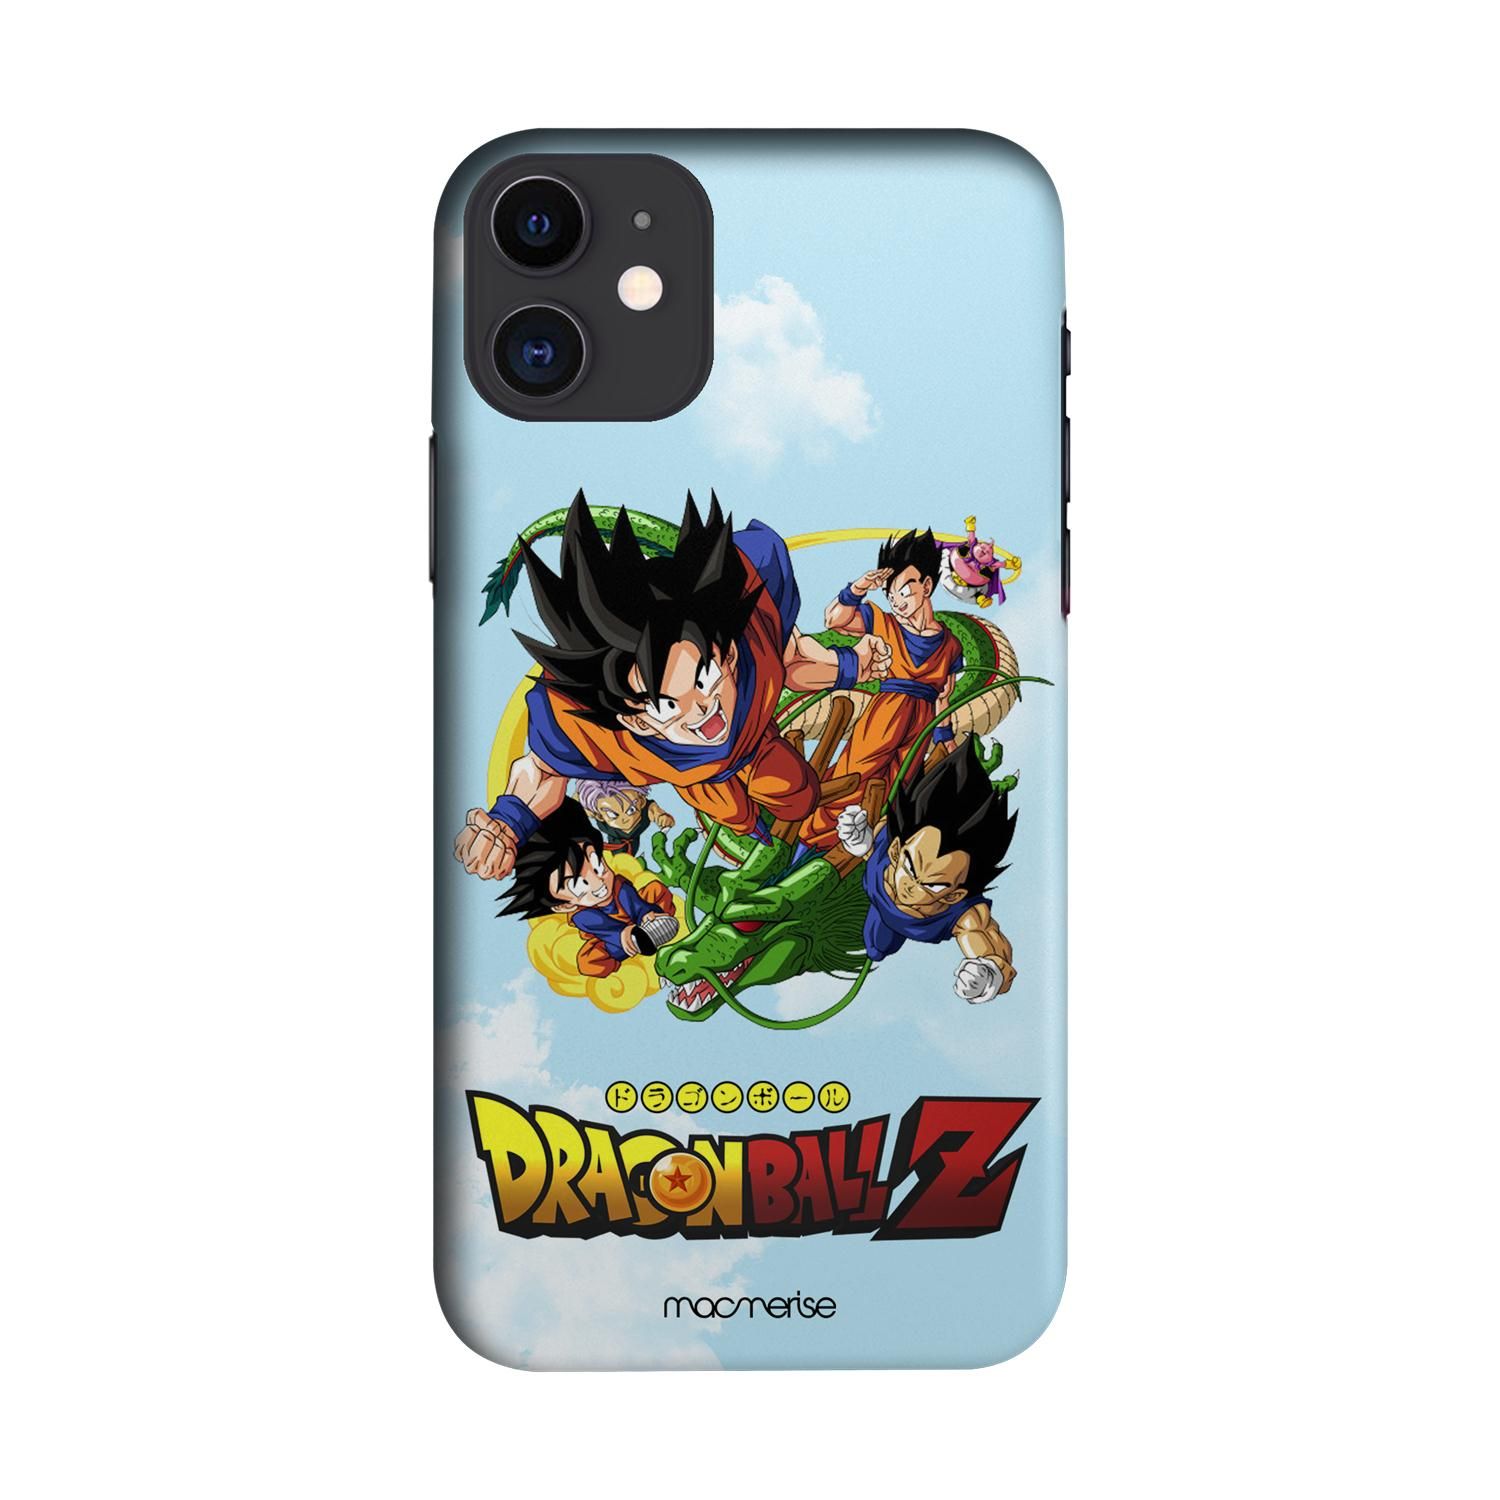 Buy Dragon ball Z - Sleek Phone Case for iPhone 11 Online